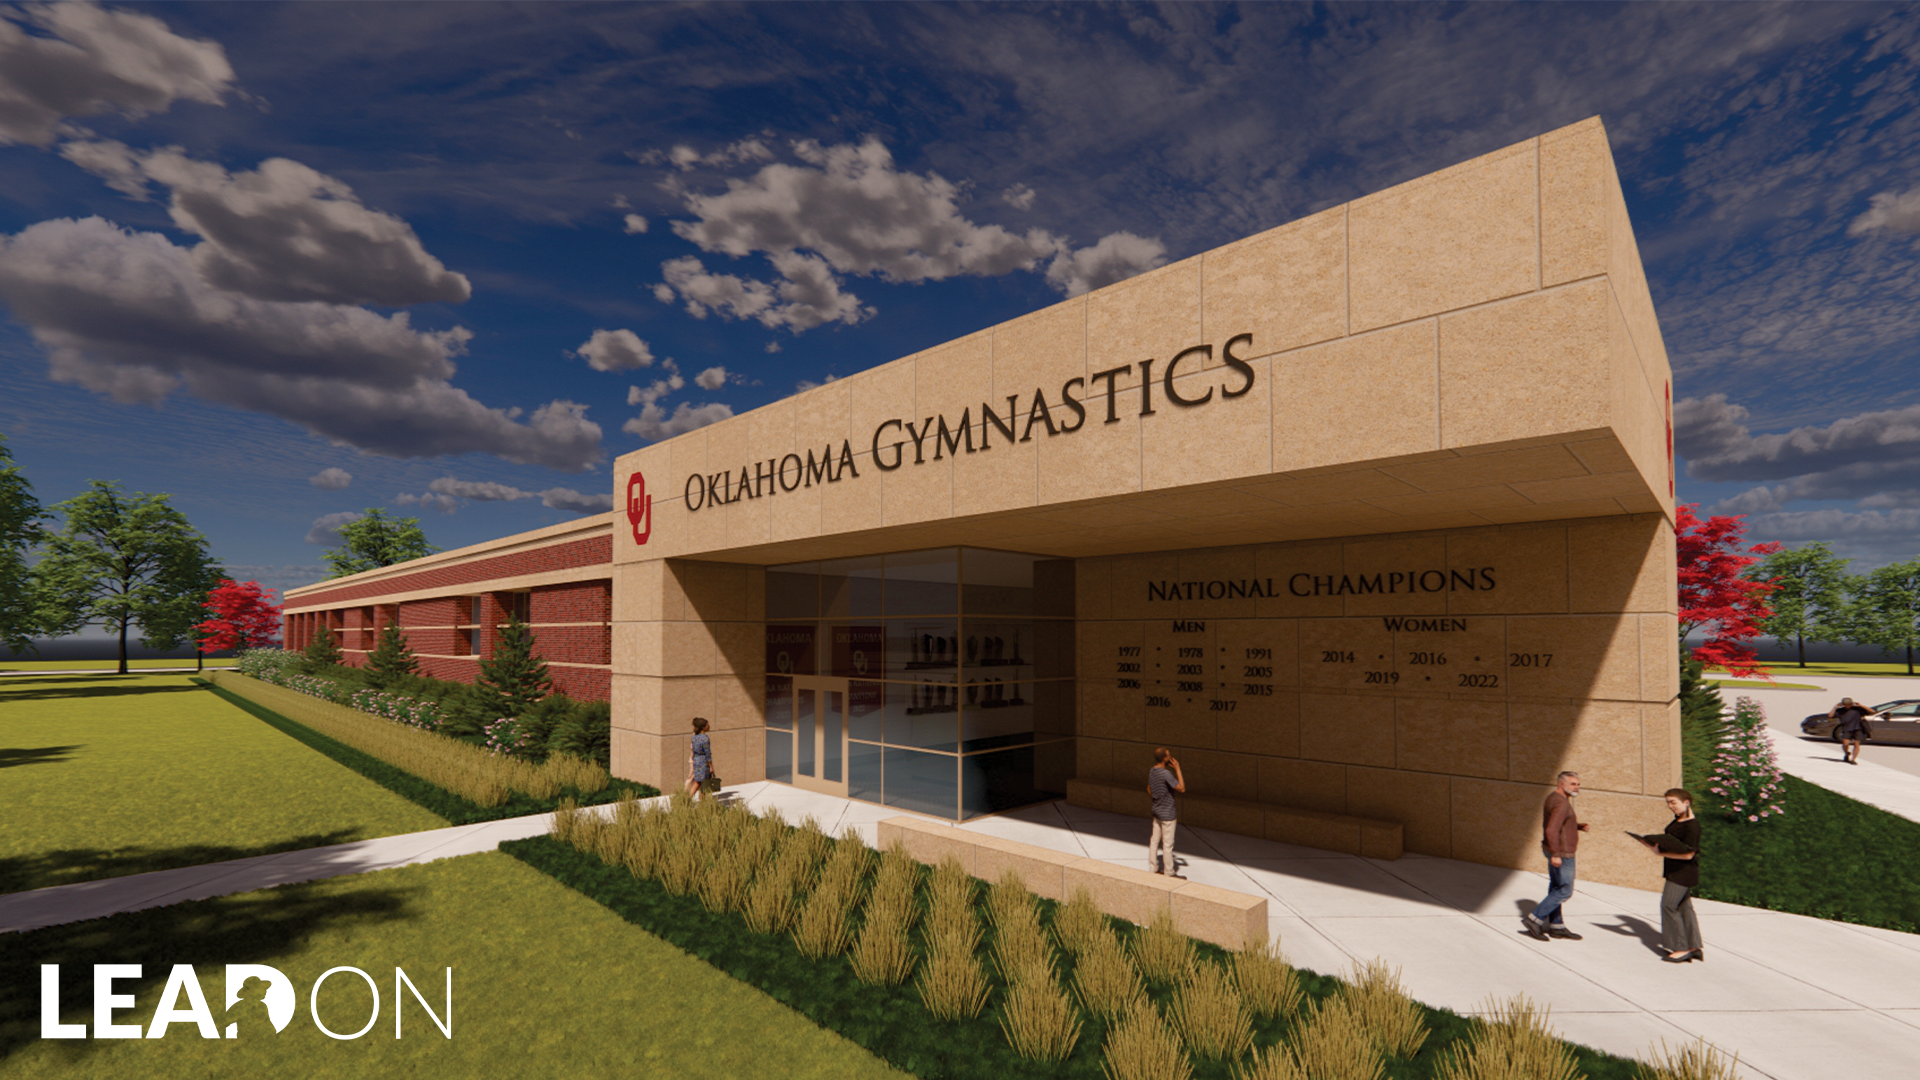 Oklahoma gymnastics training center expansion and renovation renderings.